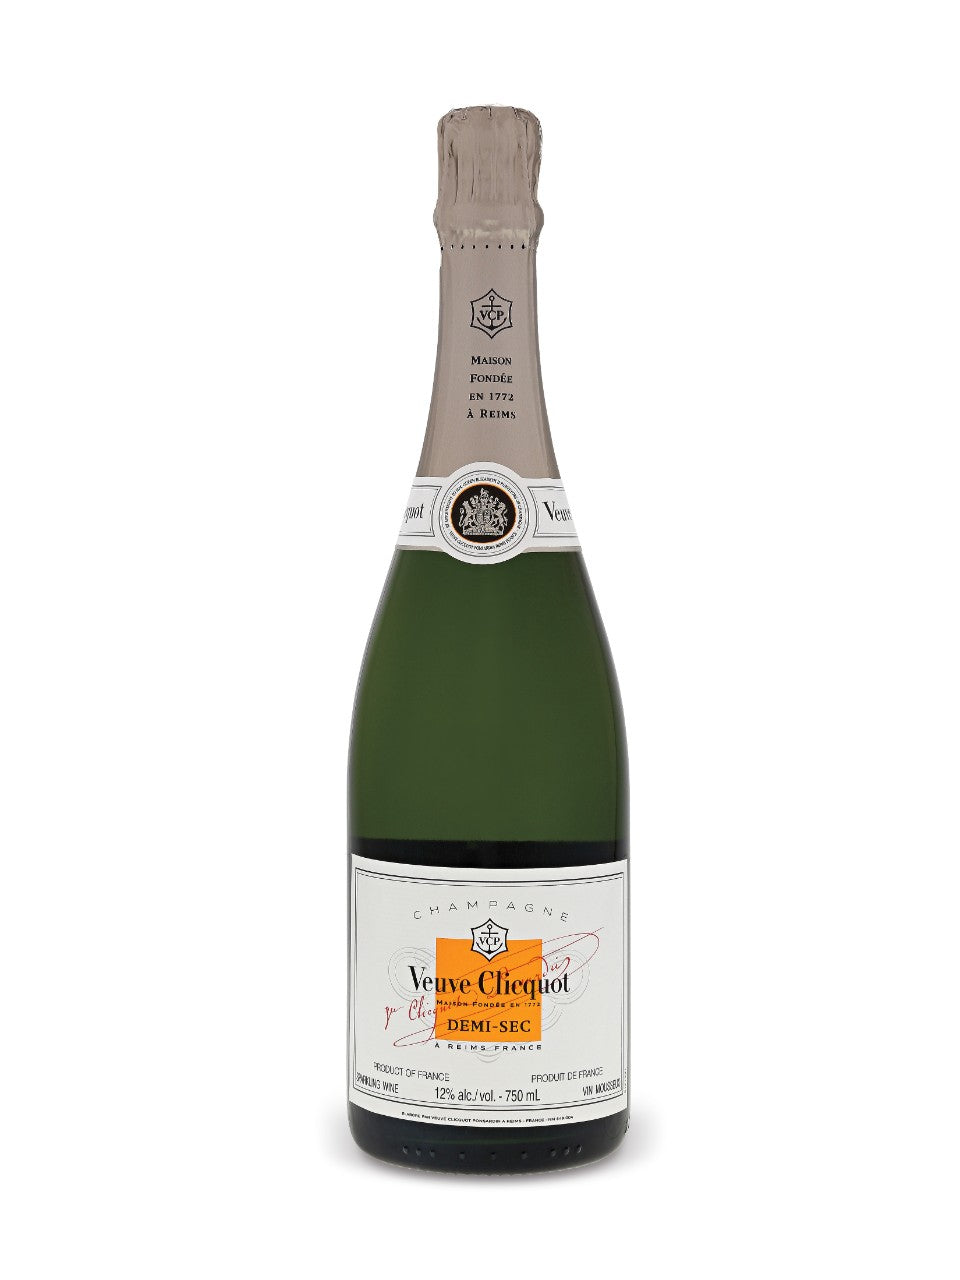 Veuve Clicquot Demi Sec Champagne 750 ml bottle